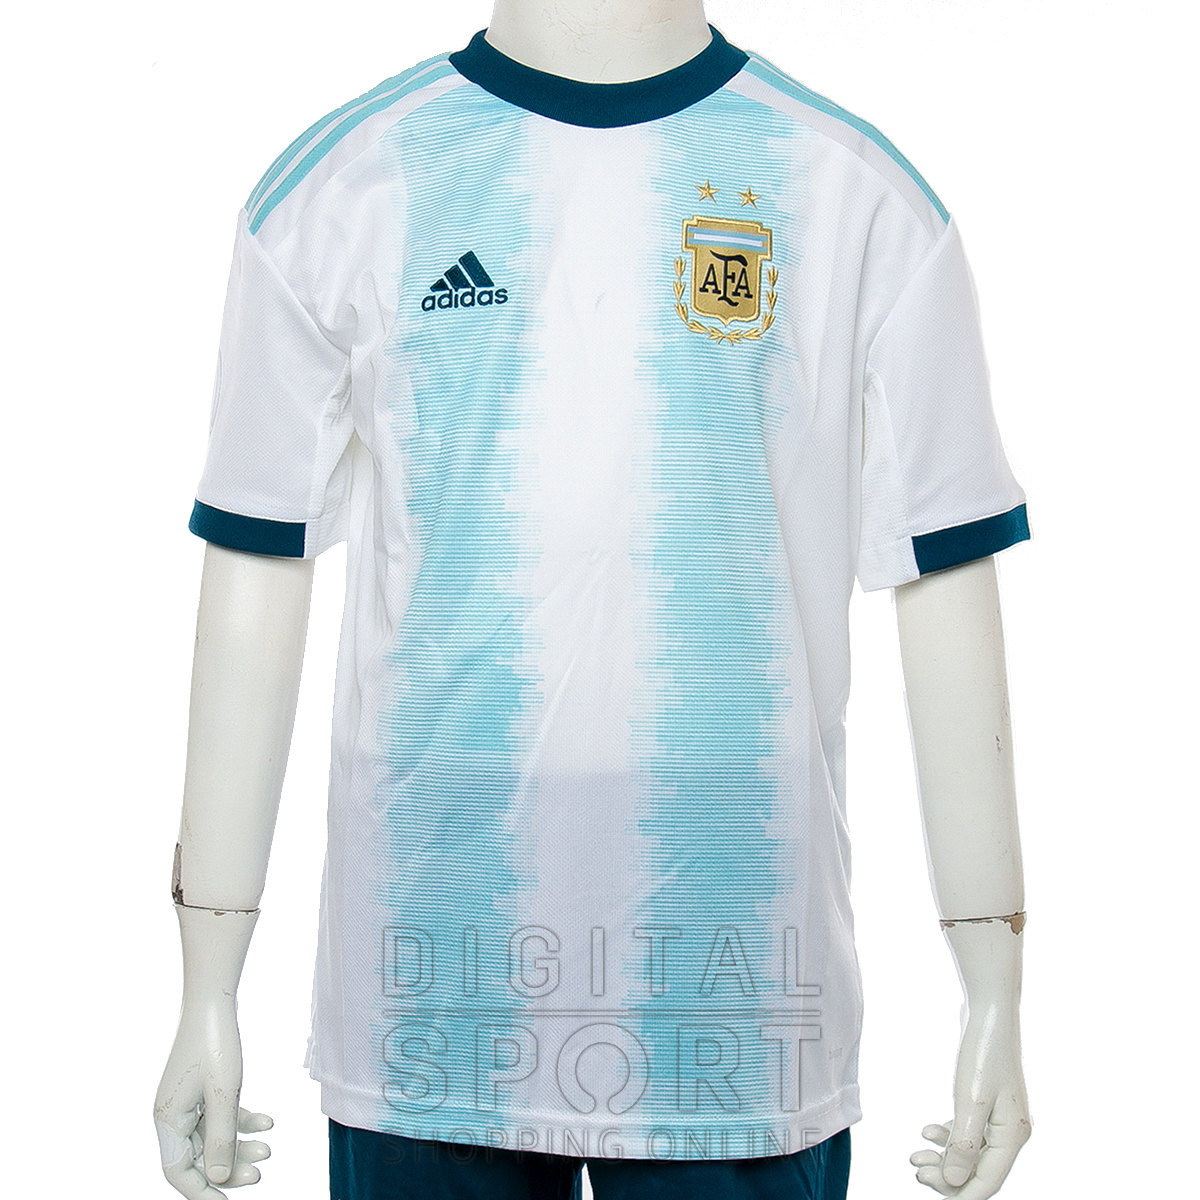 Camiseta Argentina 2019 Adidas Factory Sale, SAVE 55%.